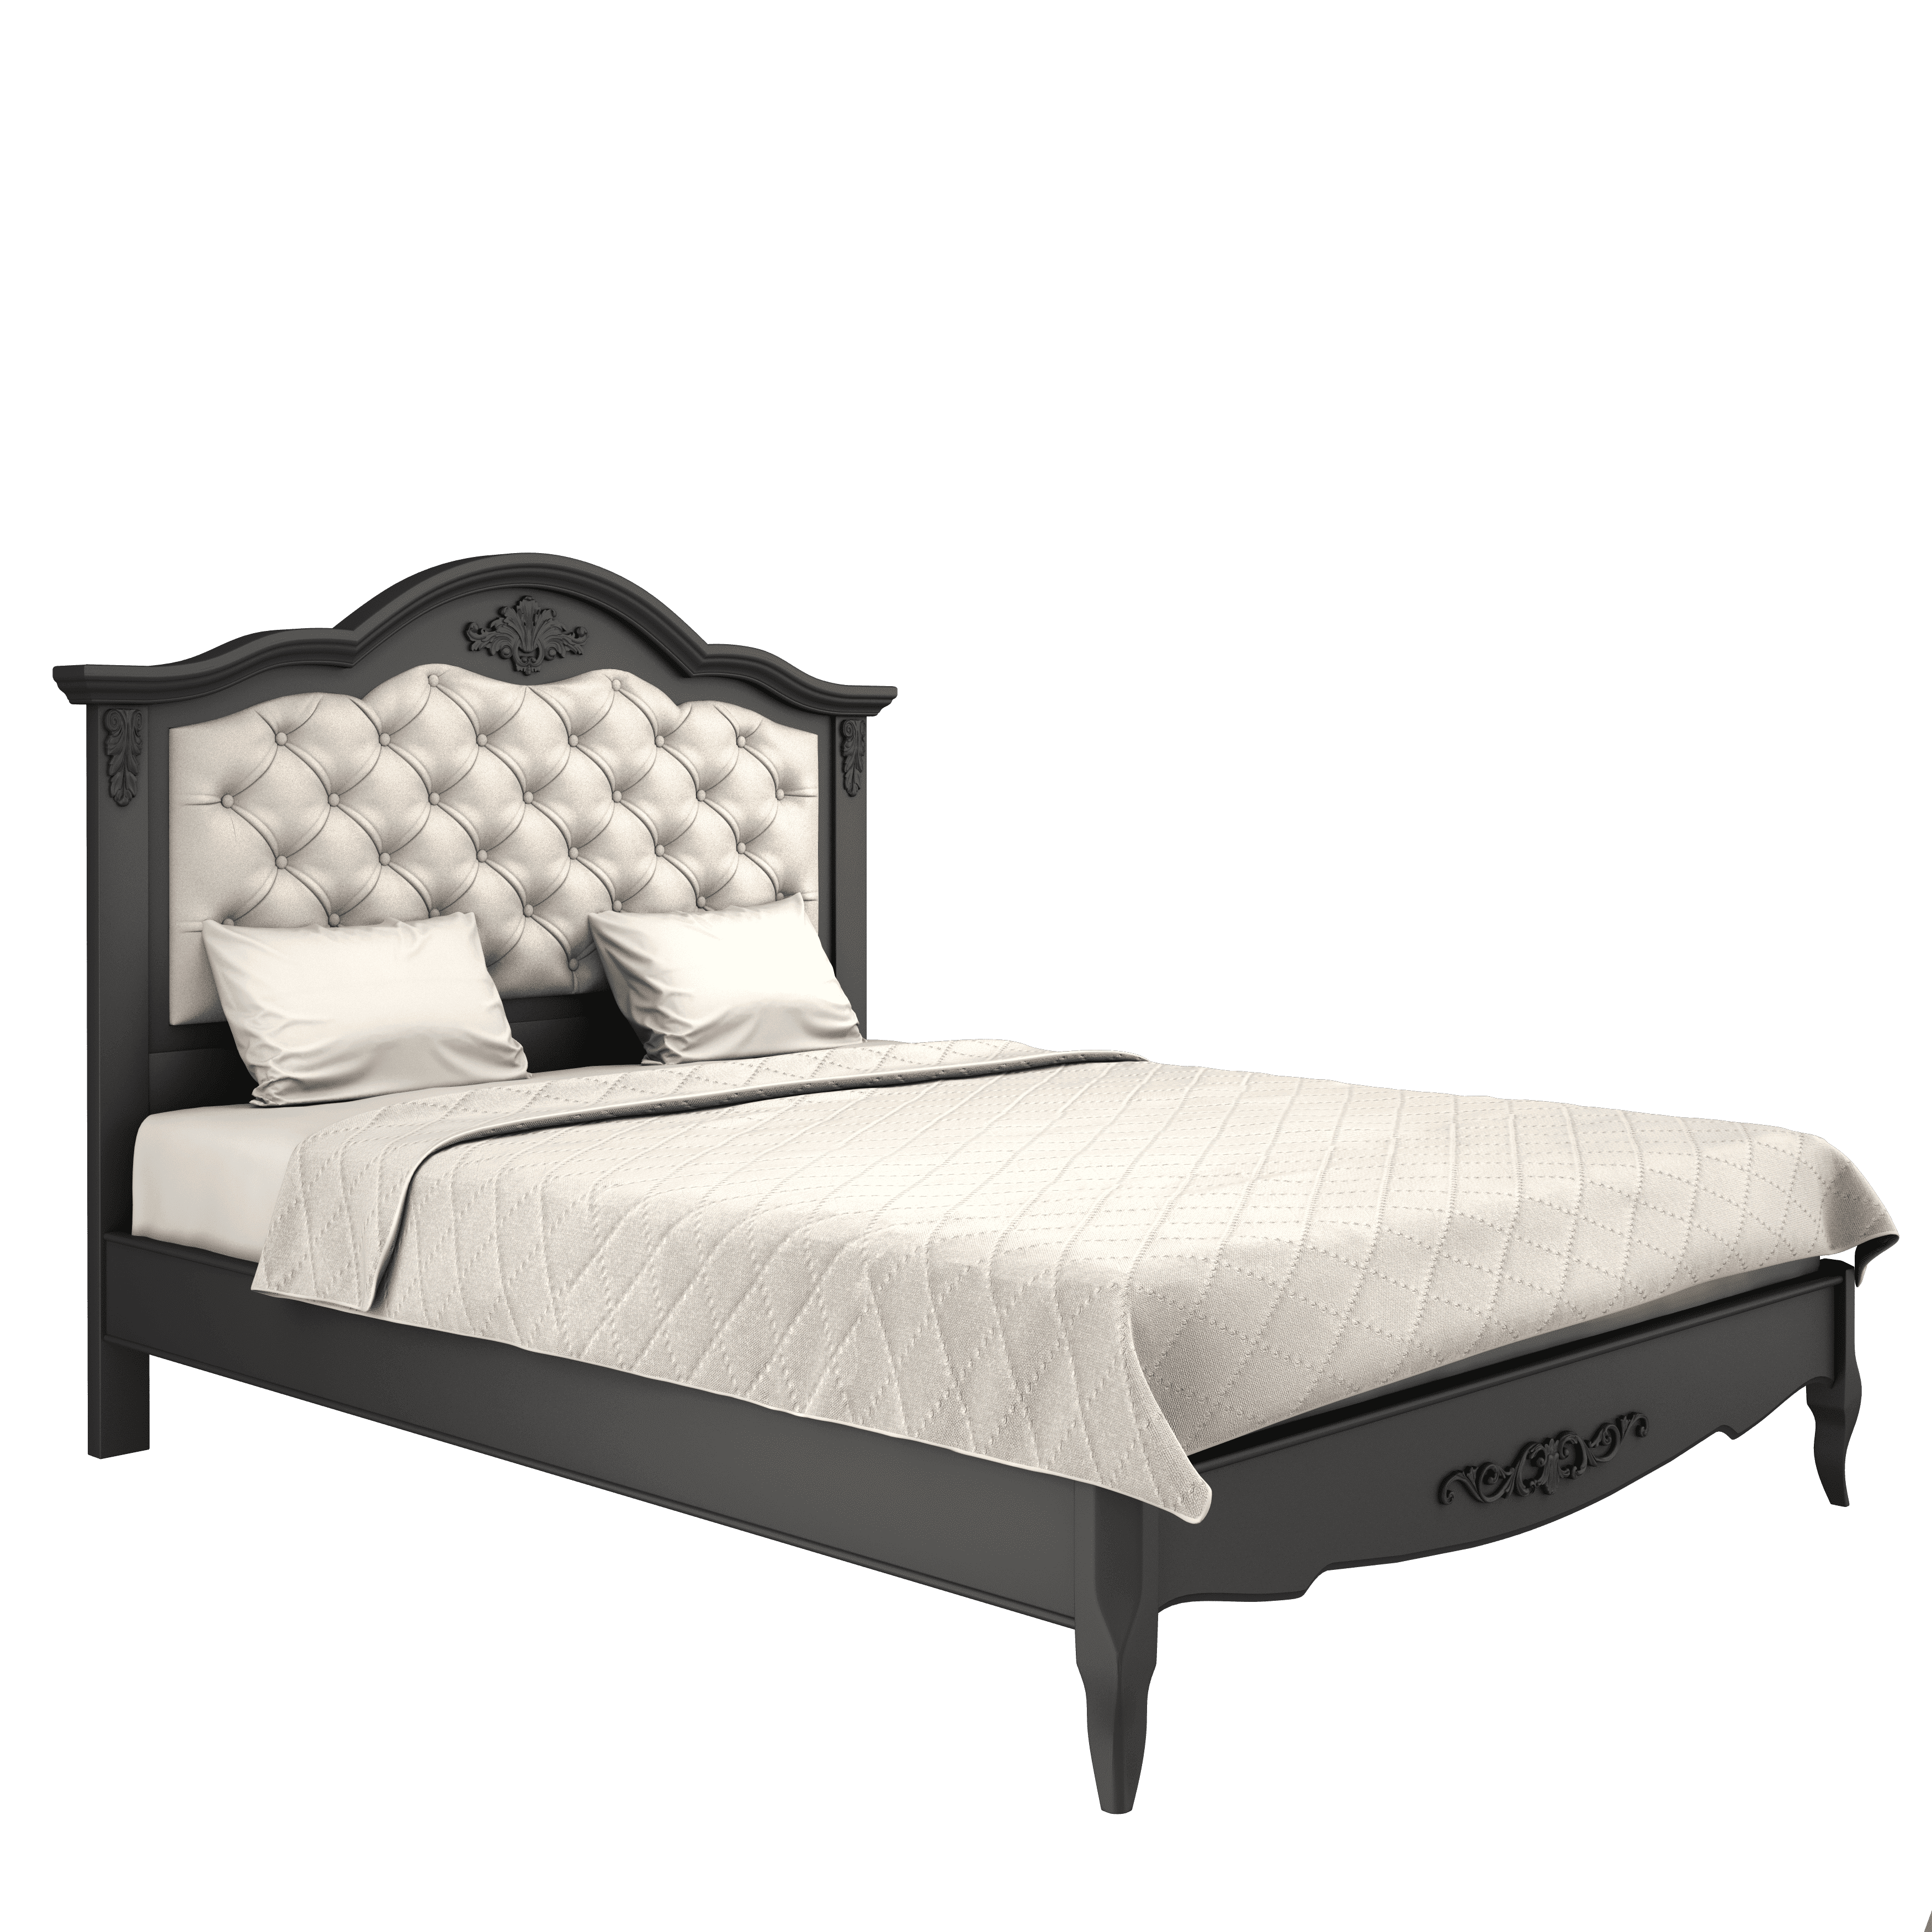 Кровать Aletan Provence, двуспальная, 180x200 см, цвет: черный, размер 198х211х145 см (B218BL)B218BL